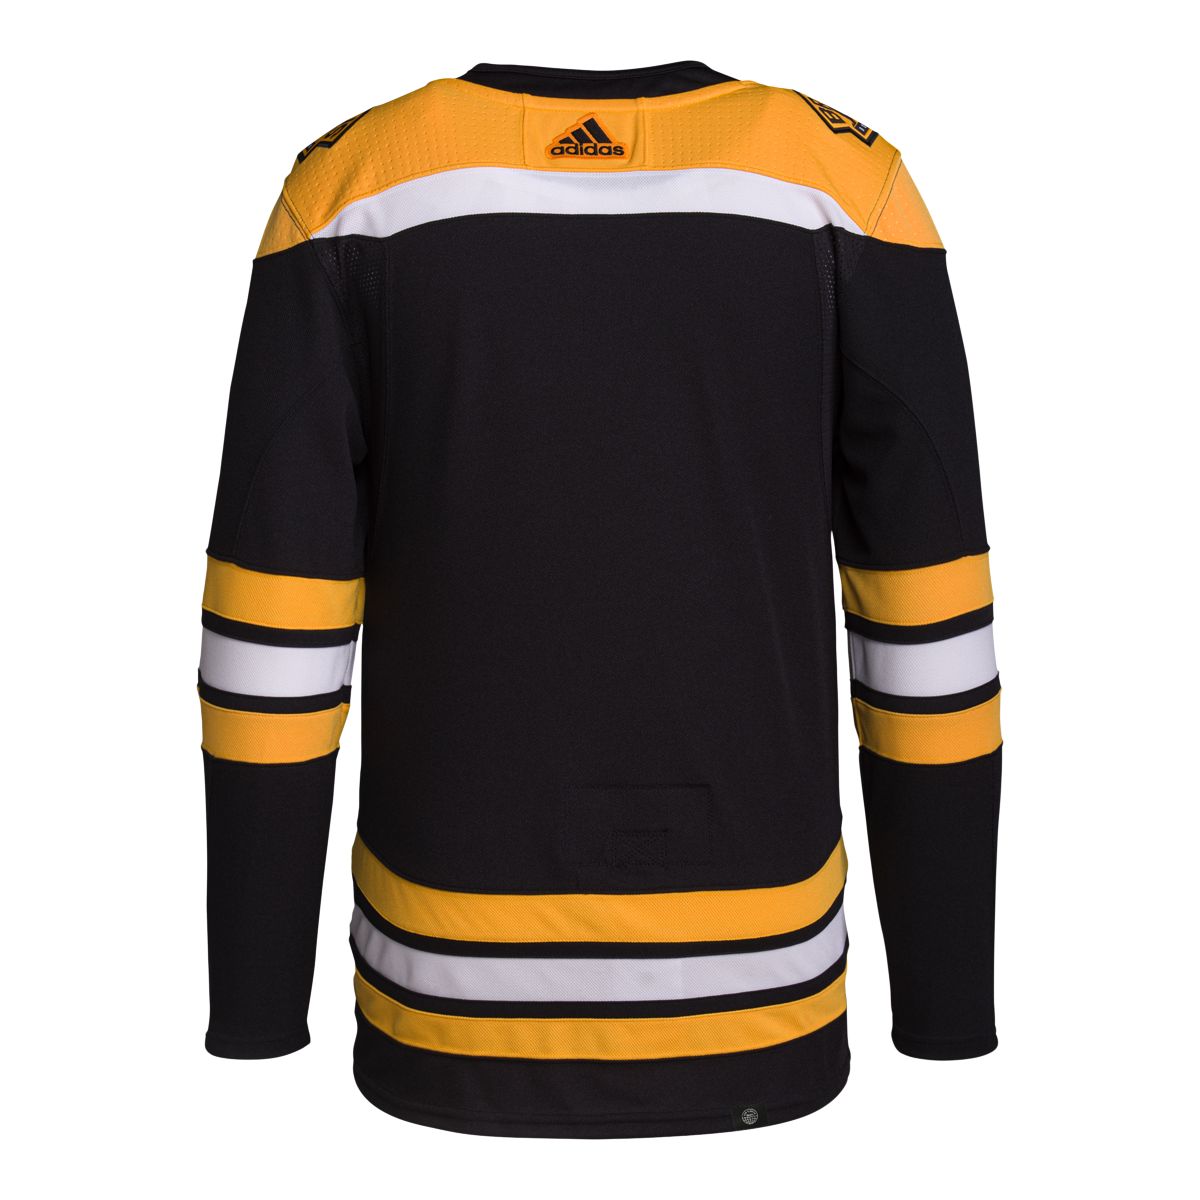 Women's Boston Bruins Fanatics Branded Black Overtime Sports Bra